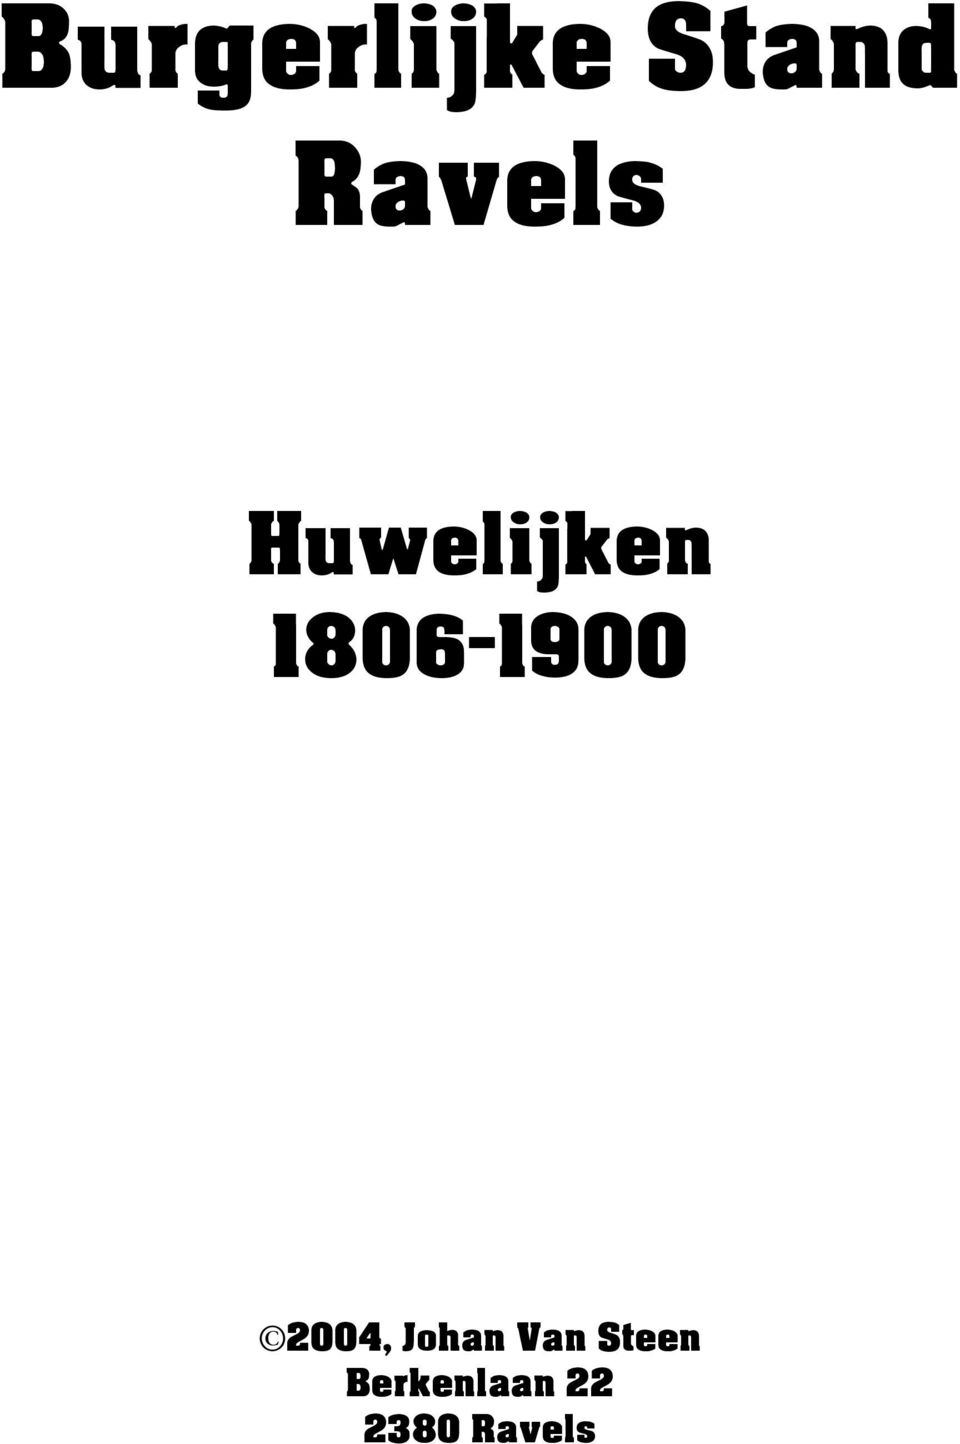 1806-1900 2004, Johan